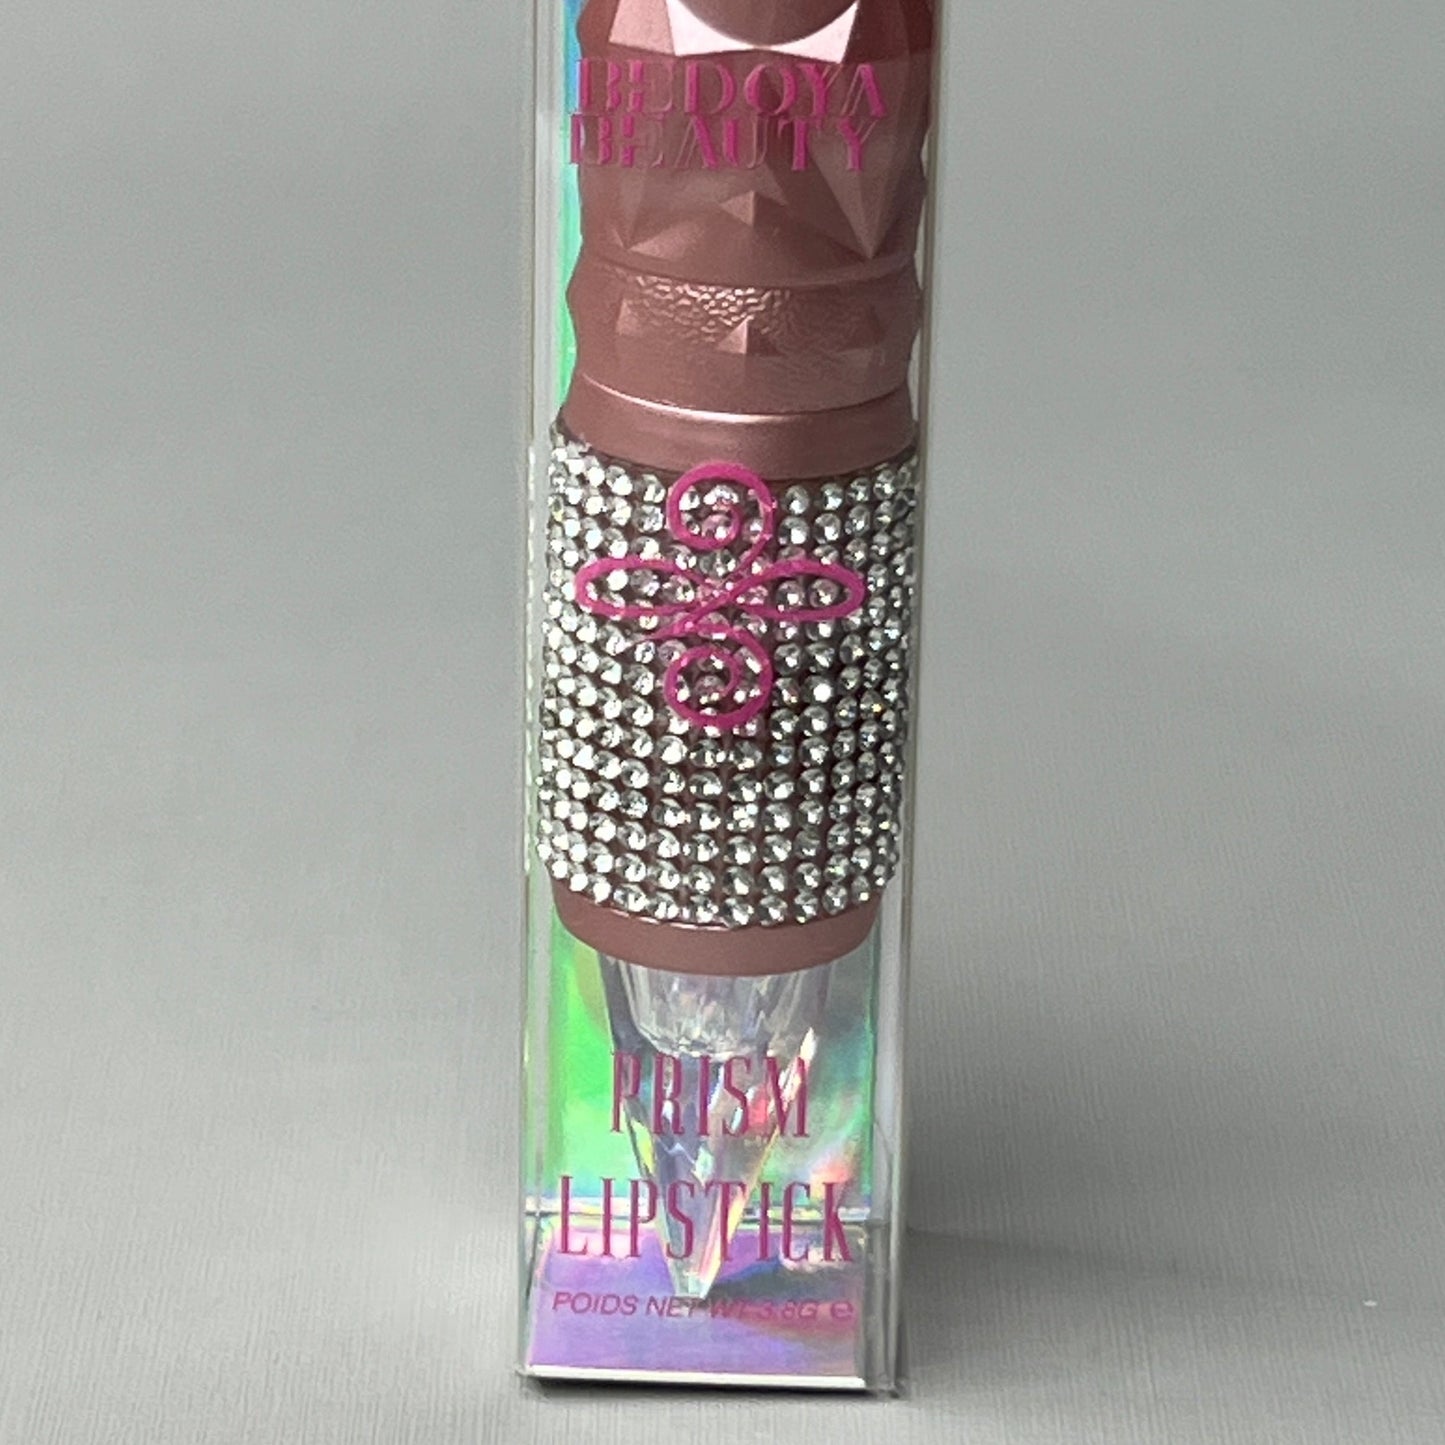 BEDOYA BEAUTY PRISM Lipstick Matte Fine Wine (Deep Plum) Vegan 3.8g (New)